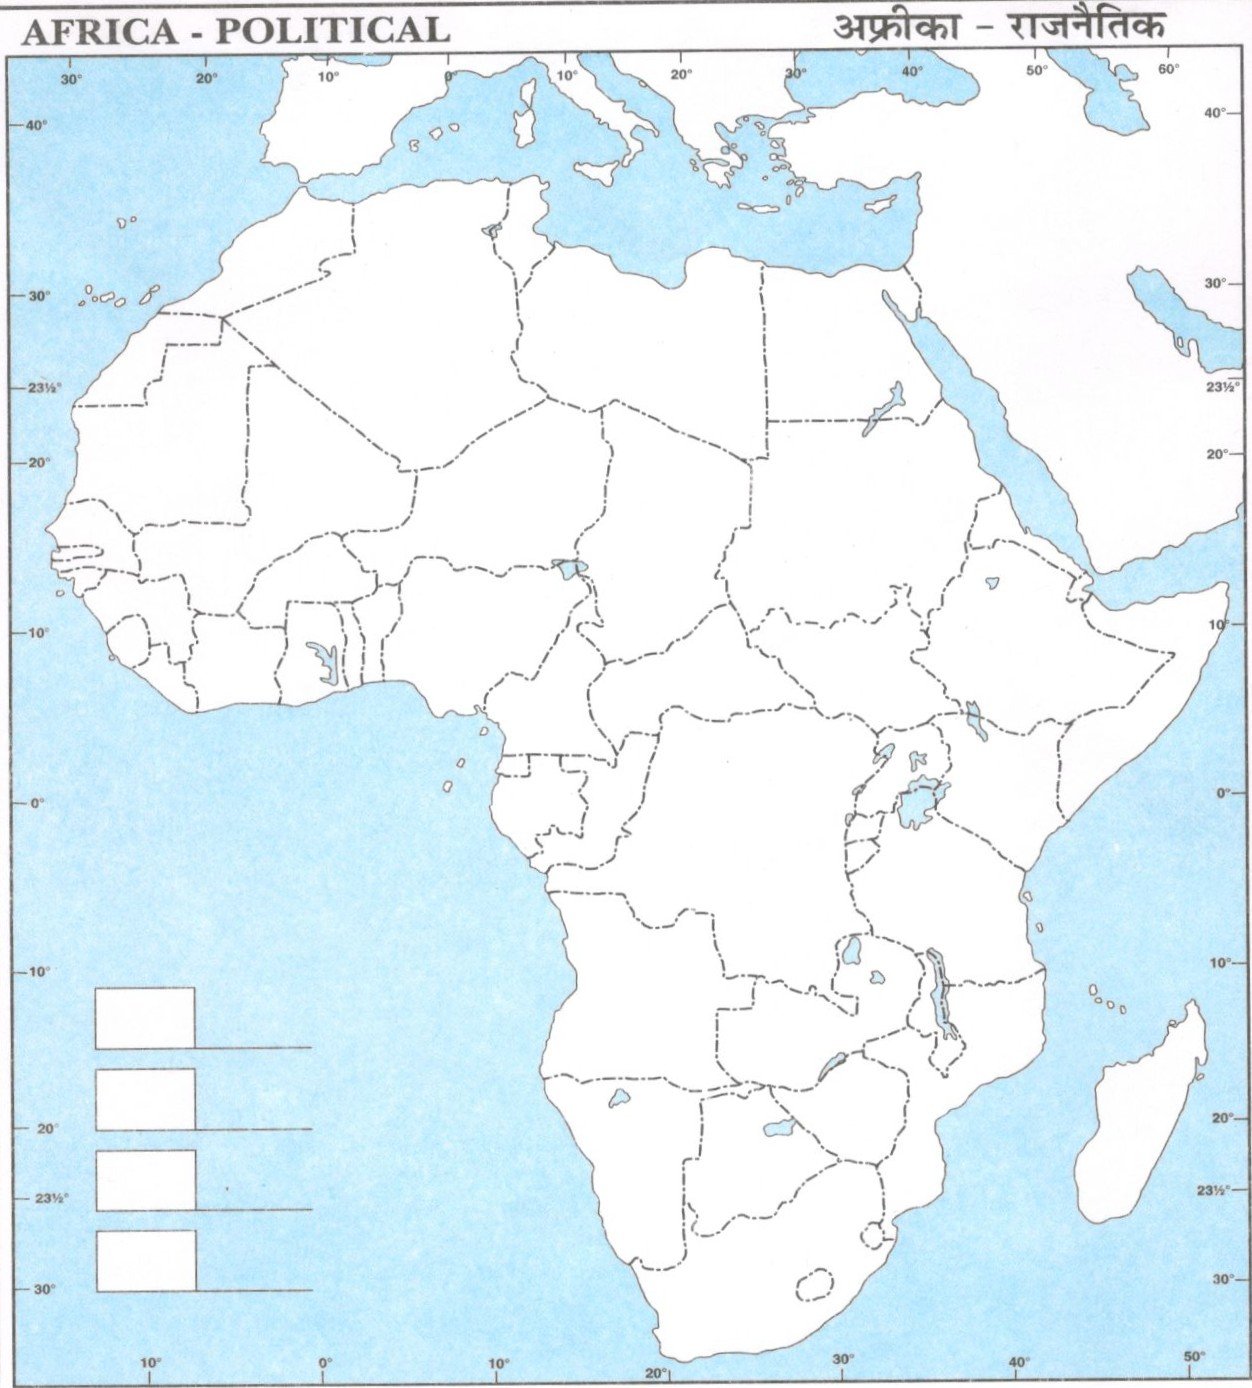 political boundaries of africa